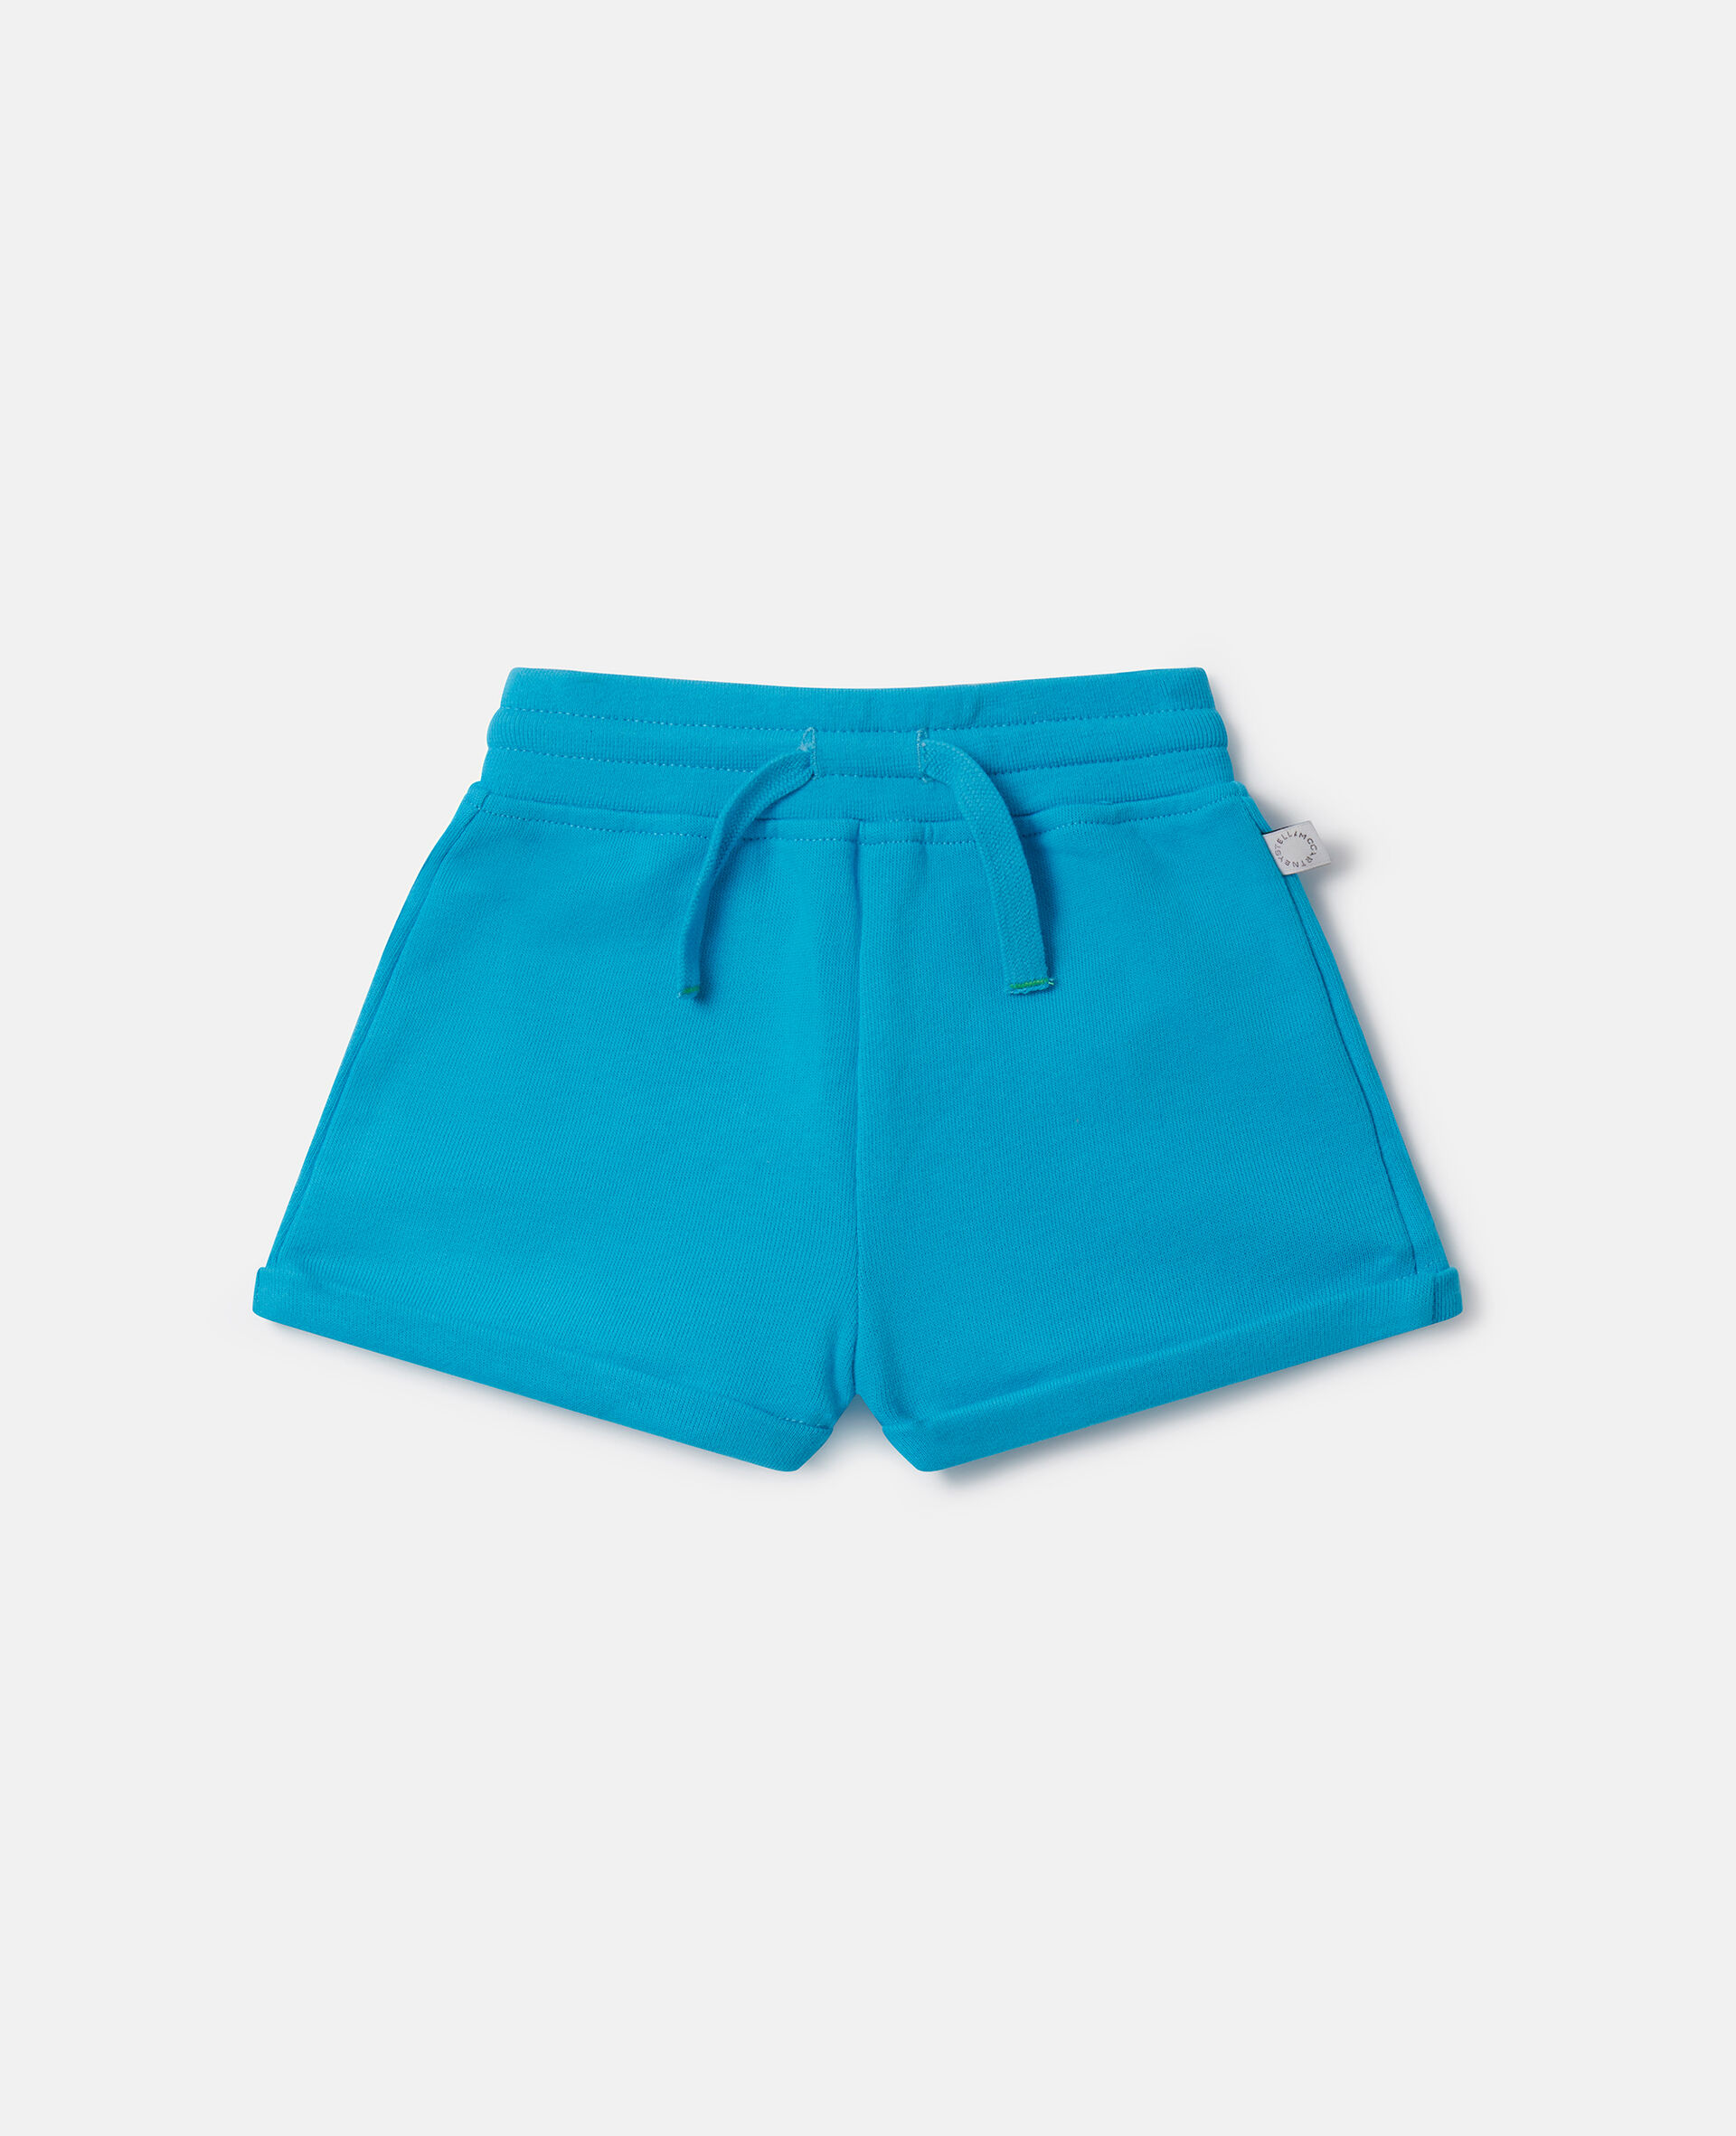 Drawstring Shorts-蓝色-large image number 0